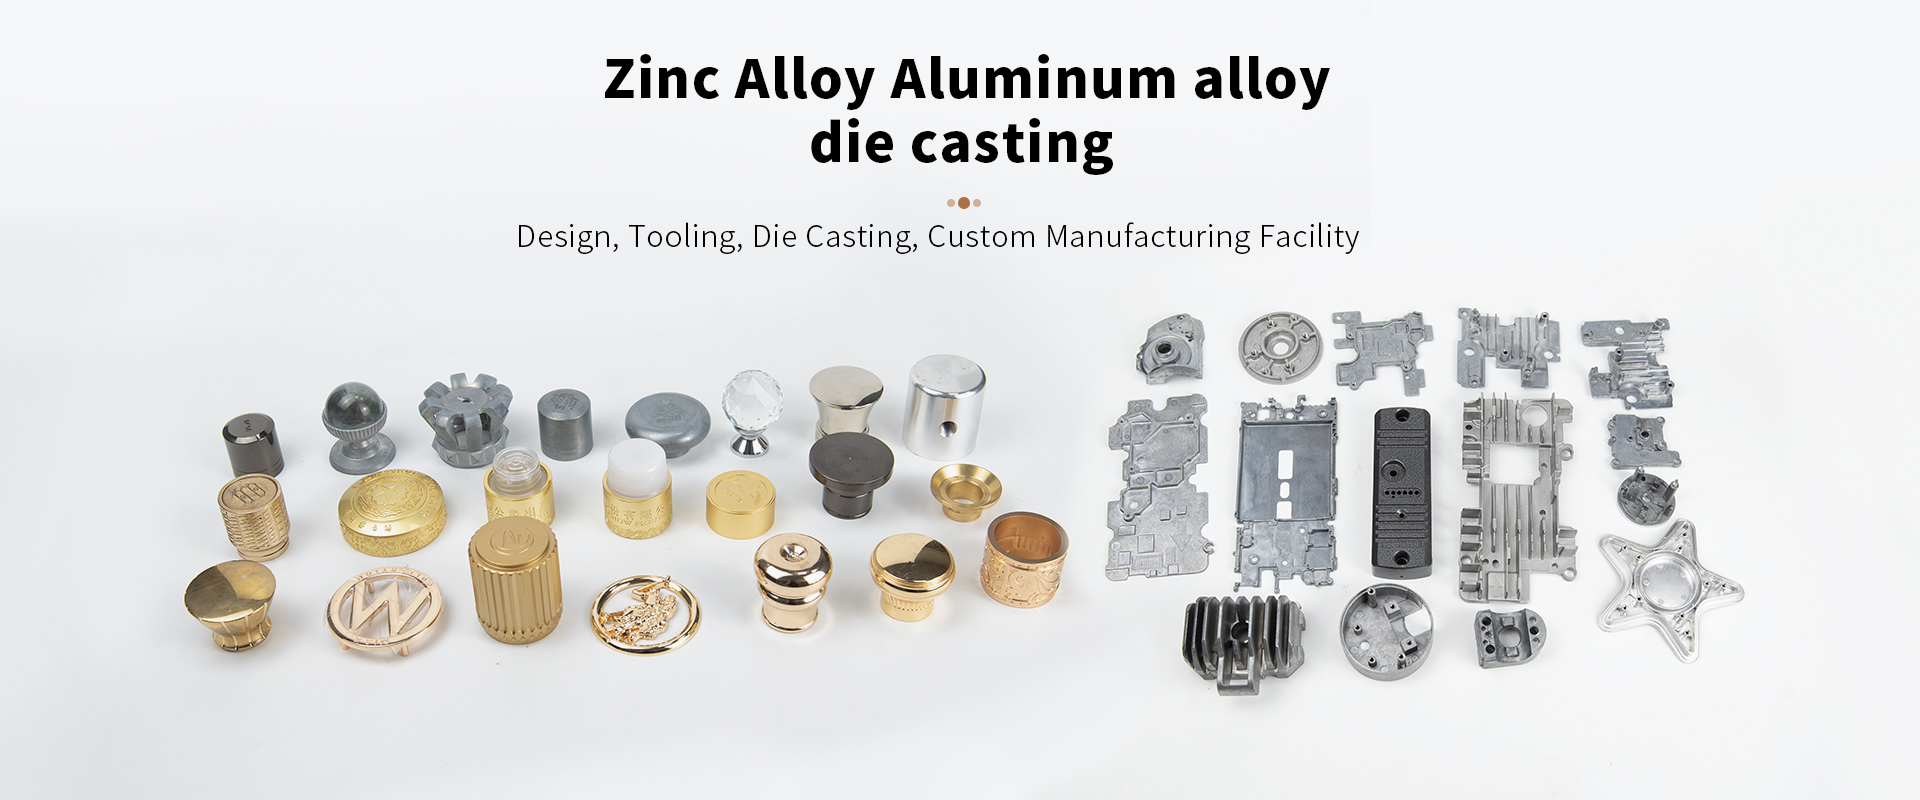 Zinc Alloy Aluminum alloy die casting